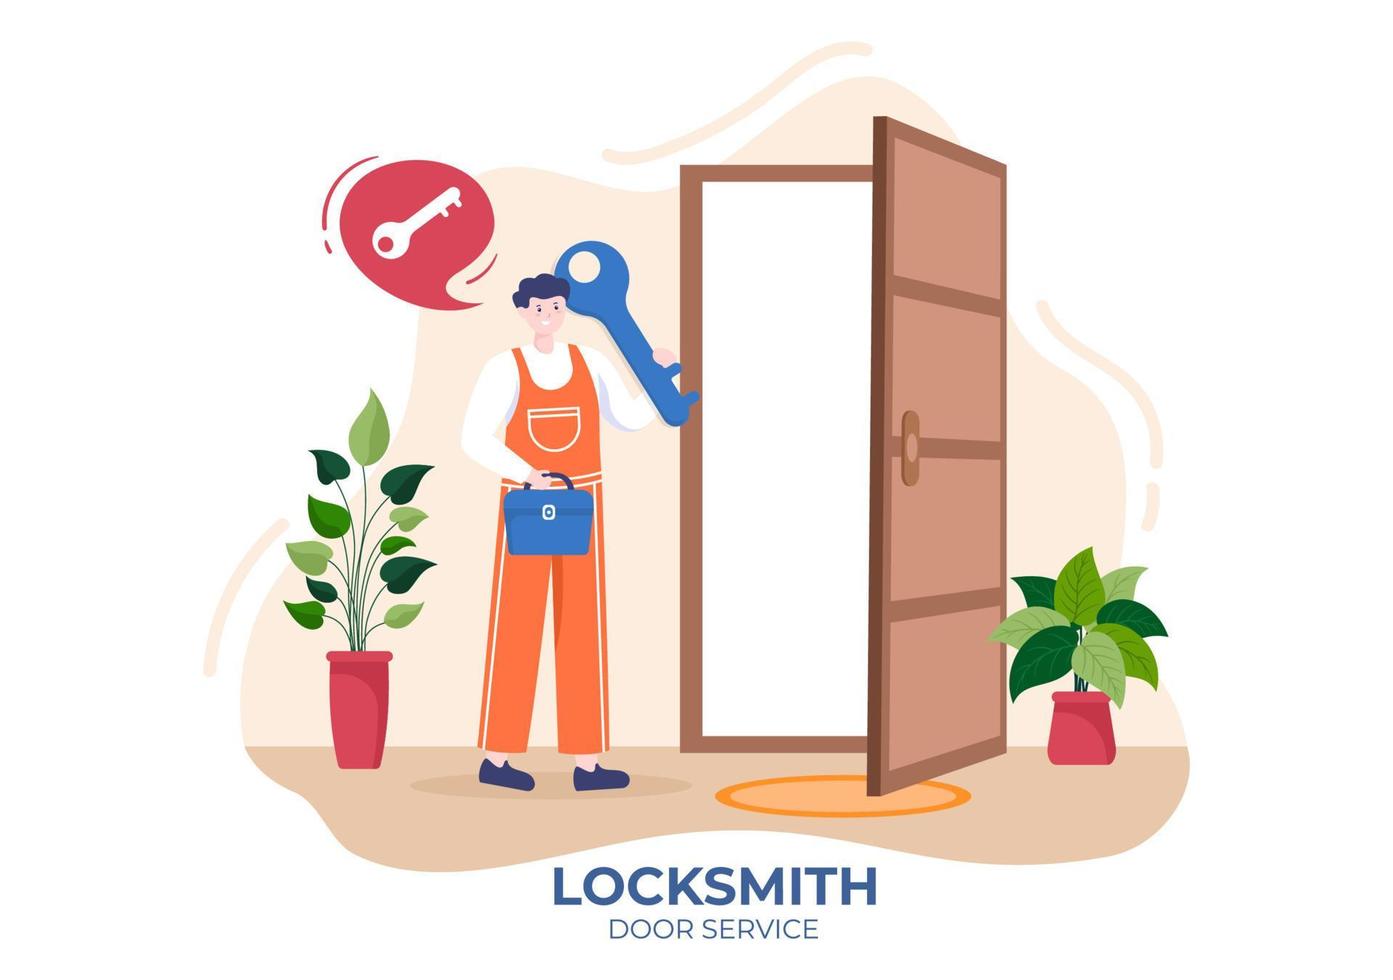 Locksmith Repairman Door Repair, Maintenance and Installation Service with Equipment as Screwdriver or Key in Flat Cartoon Background Illustration vector